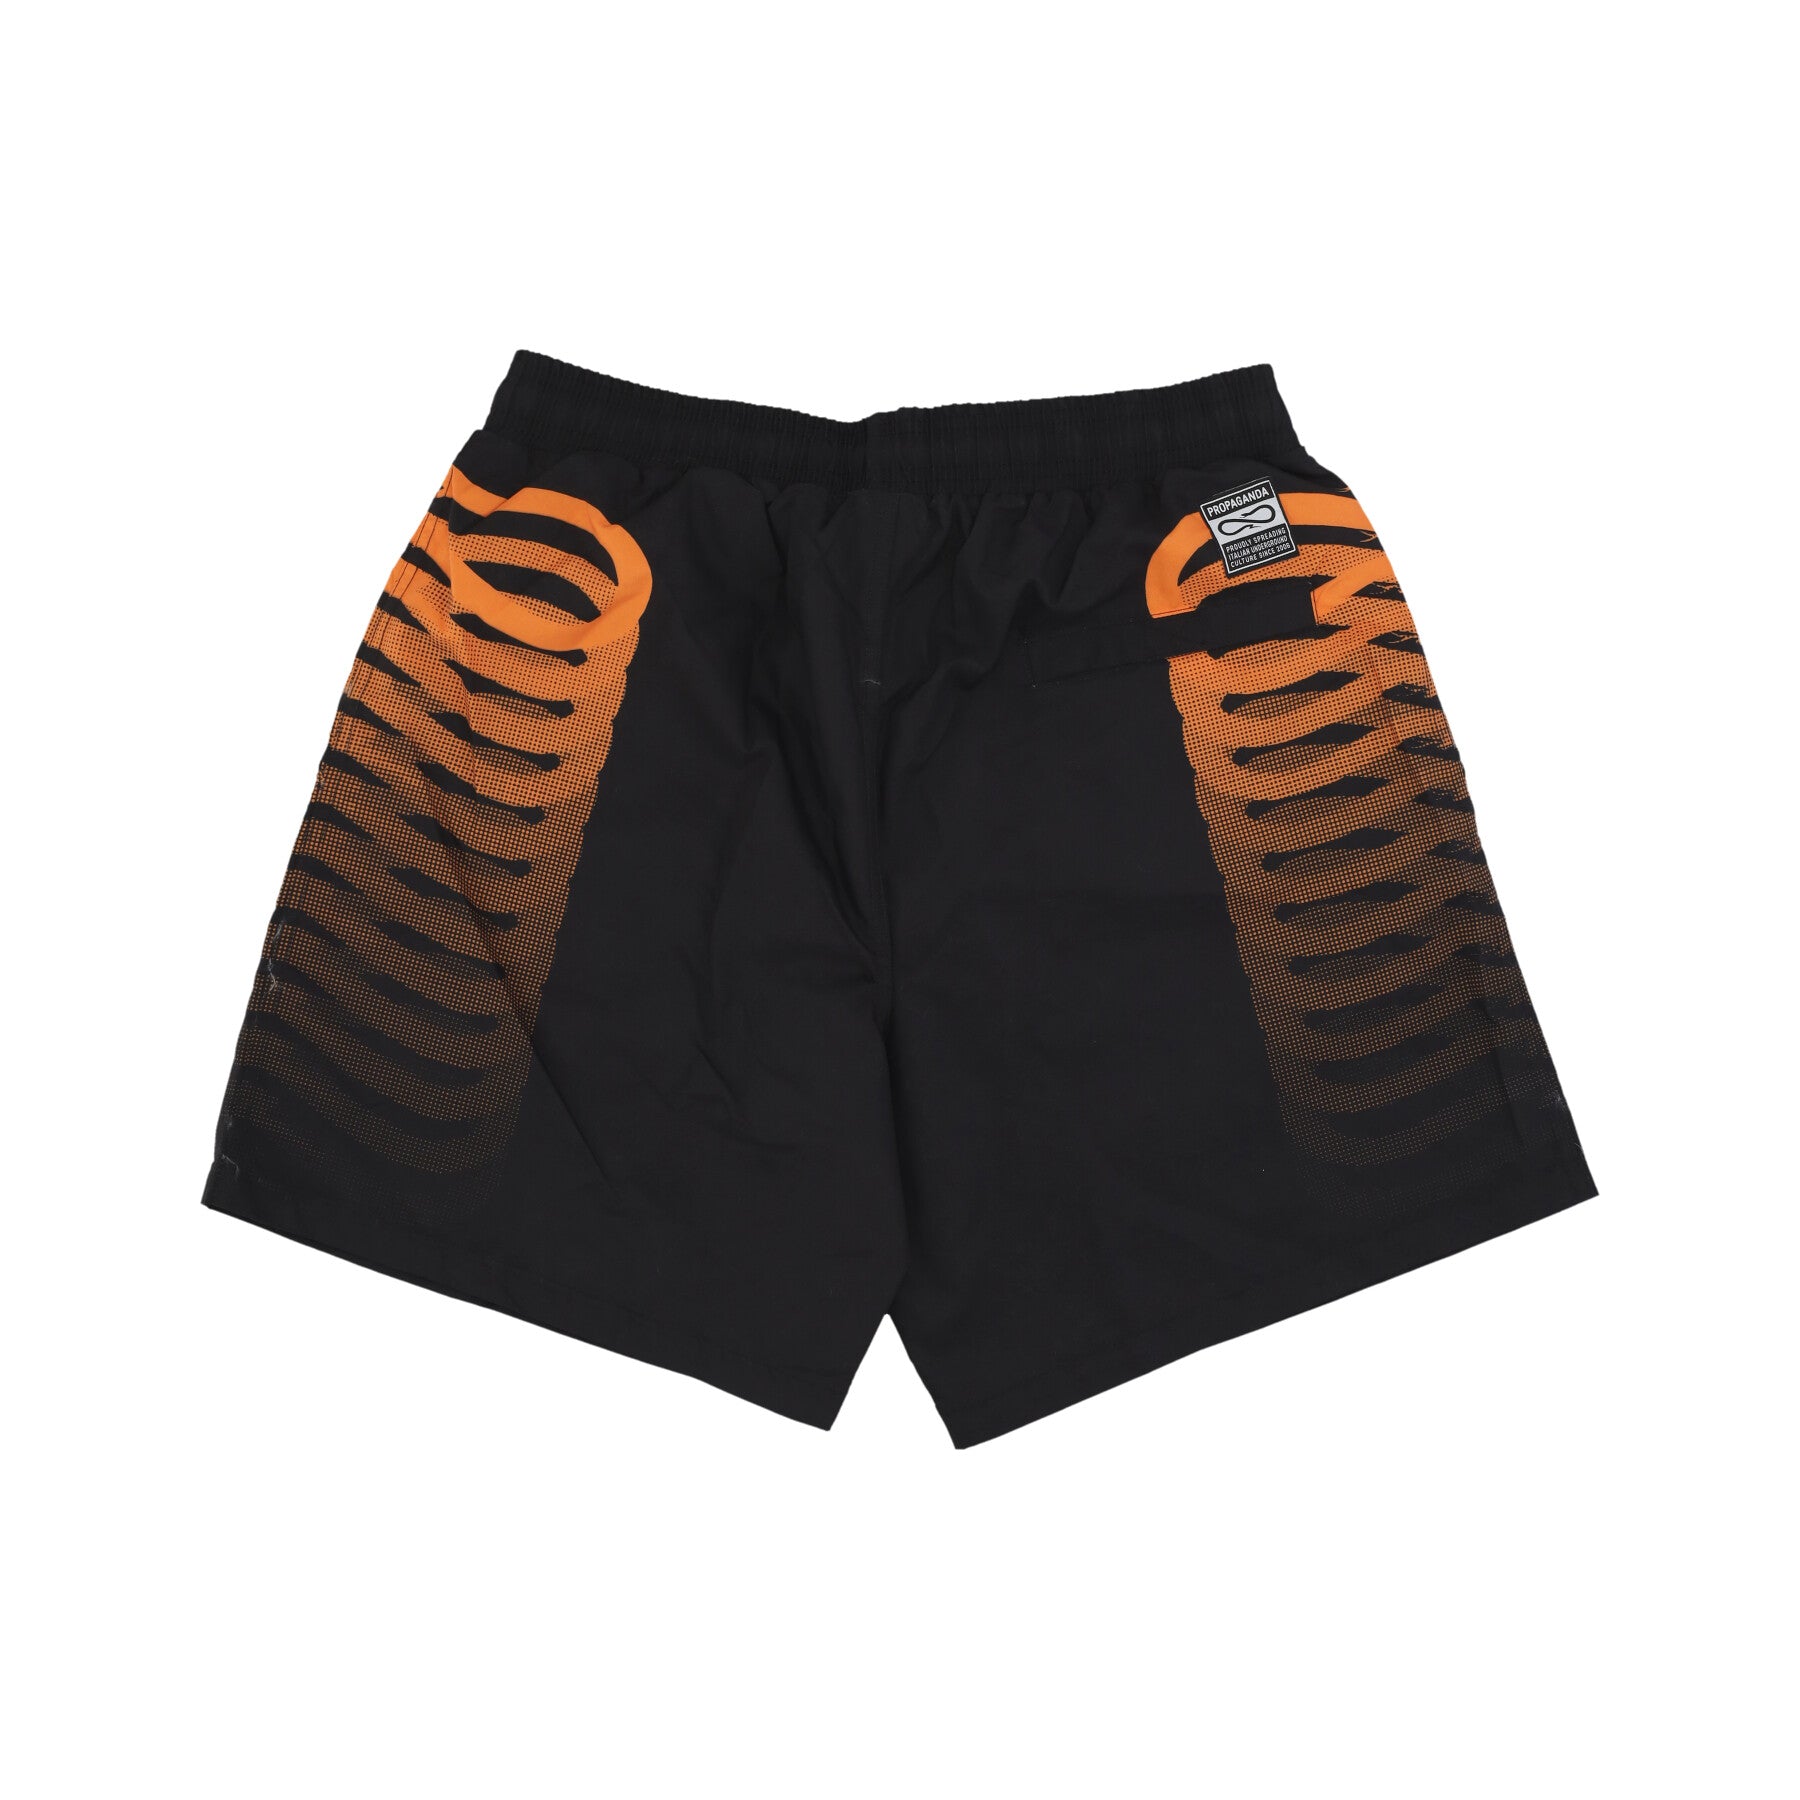 Costume Pantaloncino Uomo Ribs Swimtrunk Black/orange 24SSPRBR625